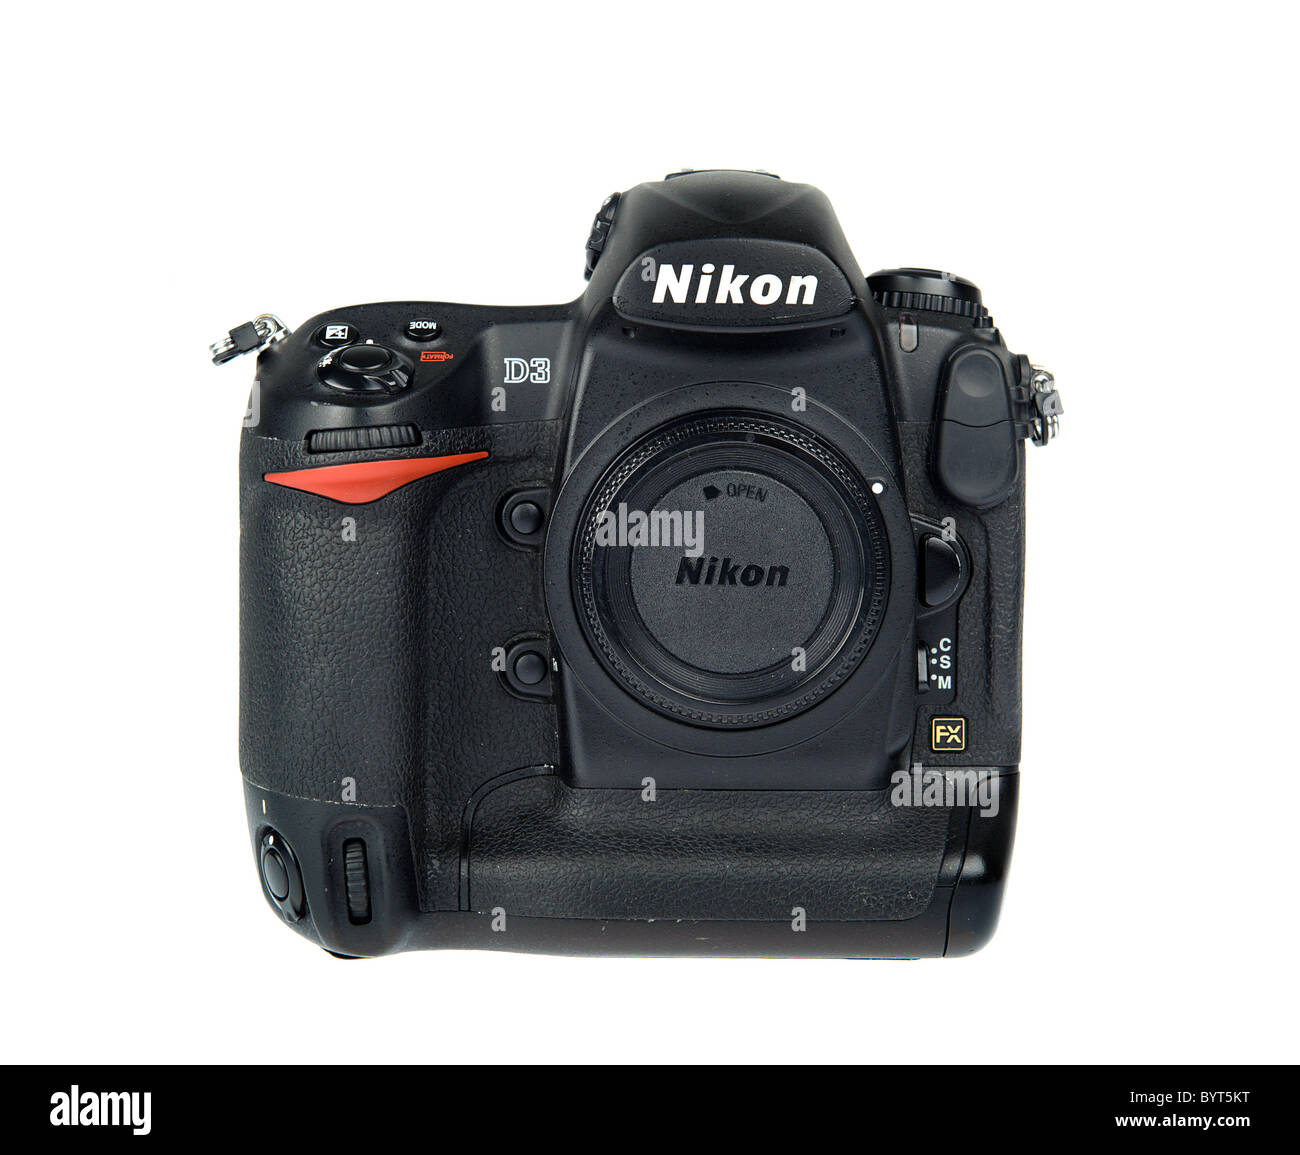 Nikon camera slr hi-res stock photography and images - Alamy